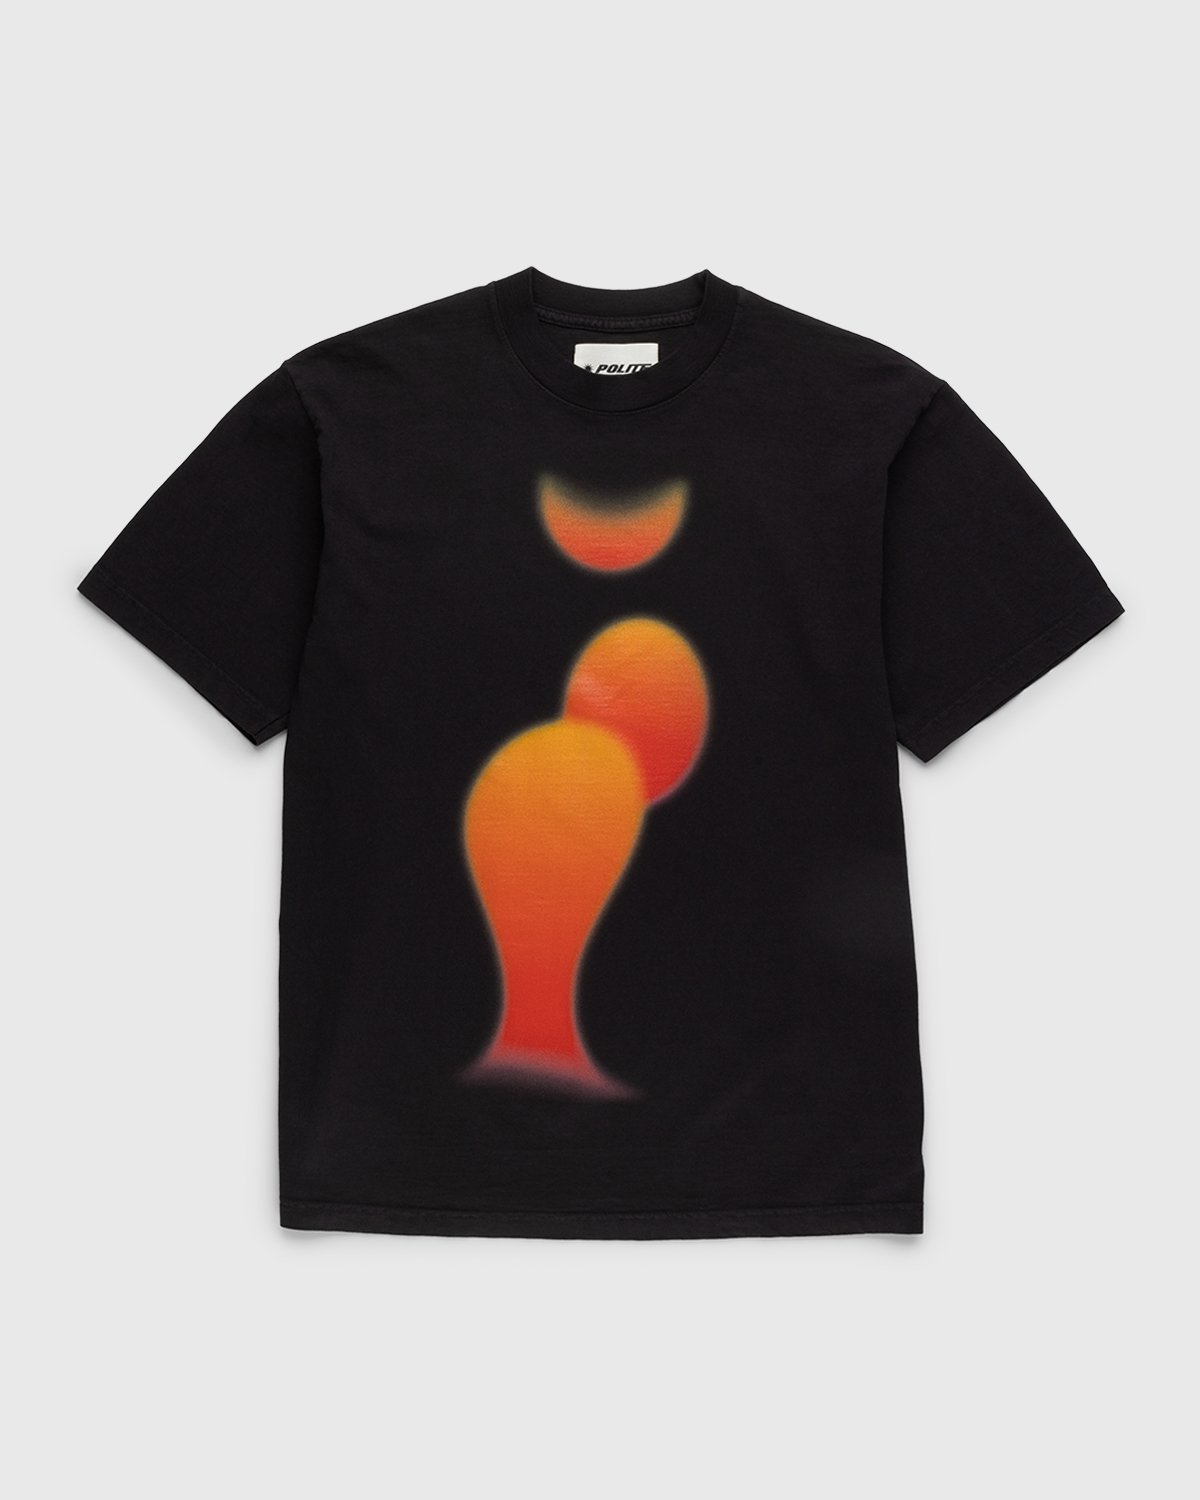 Polite Worldwide - Lava Lamp T-Shirt Black - Clothing - Black - Image 1